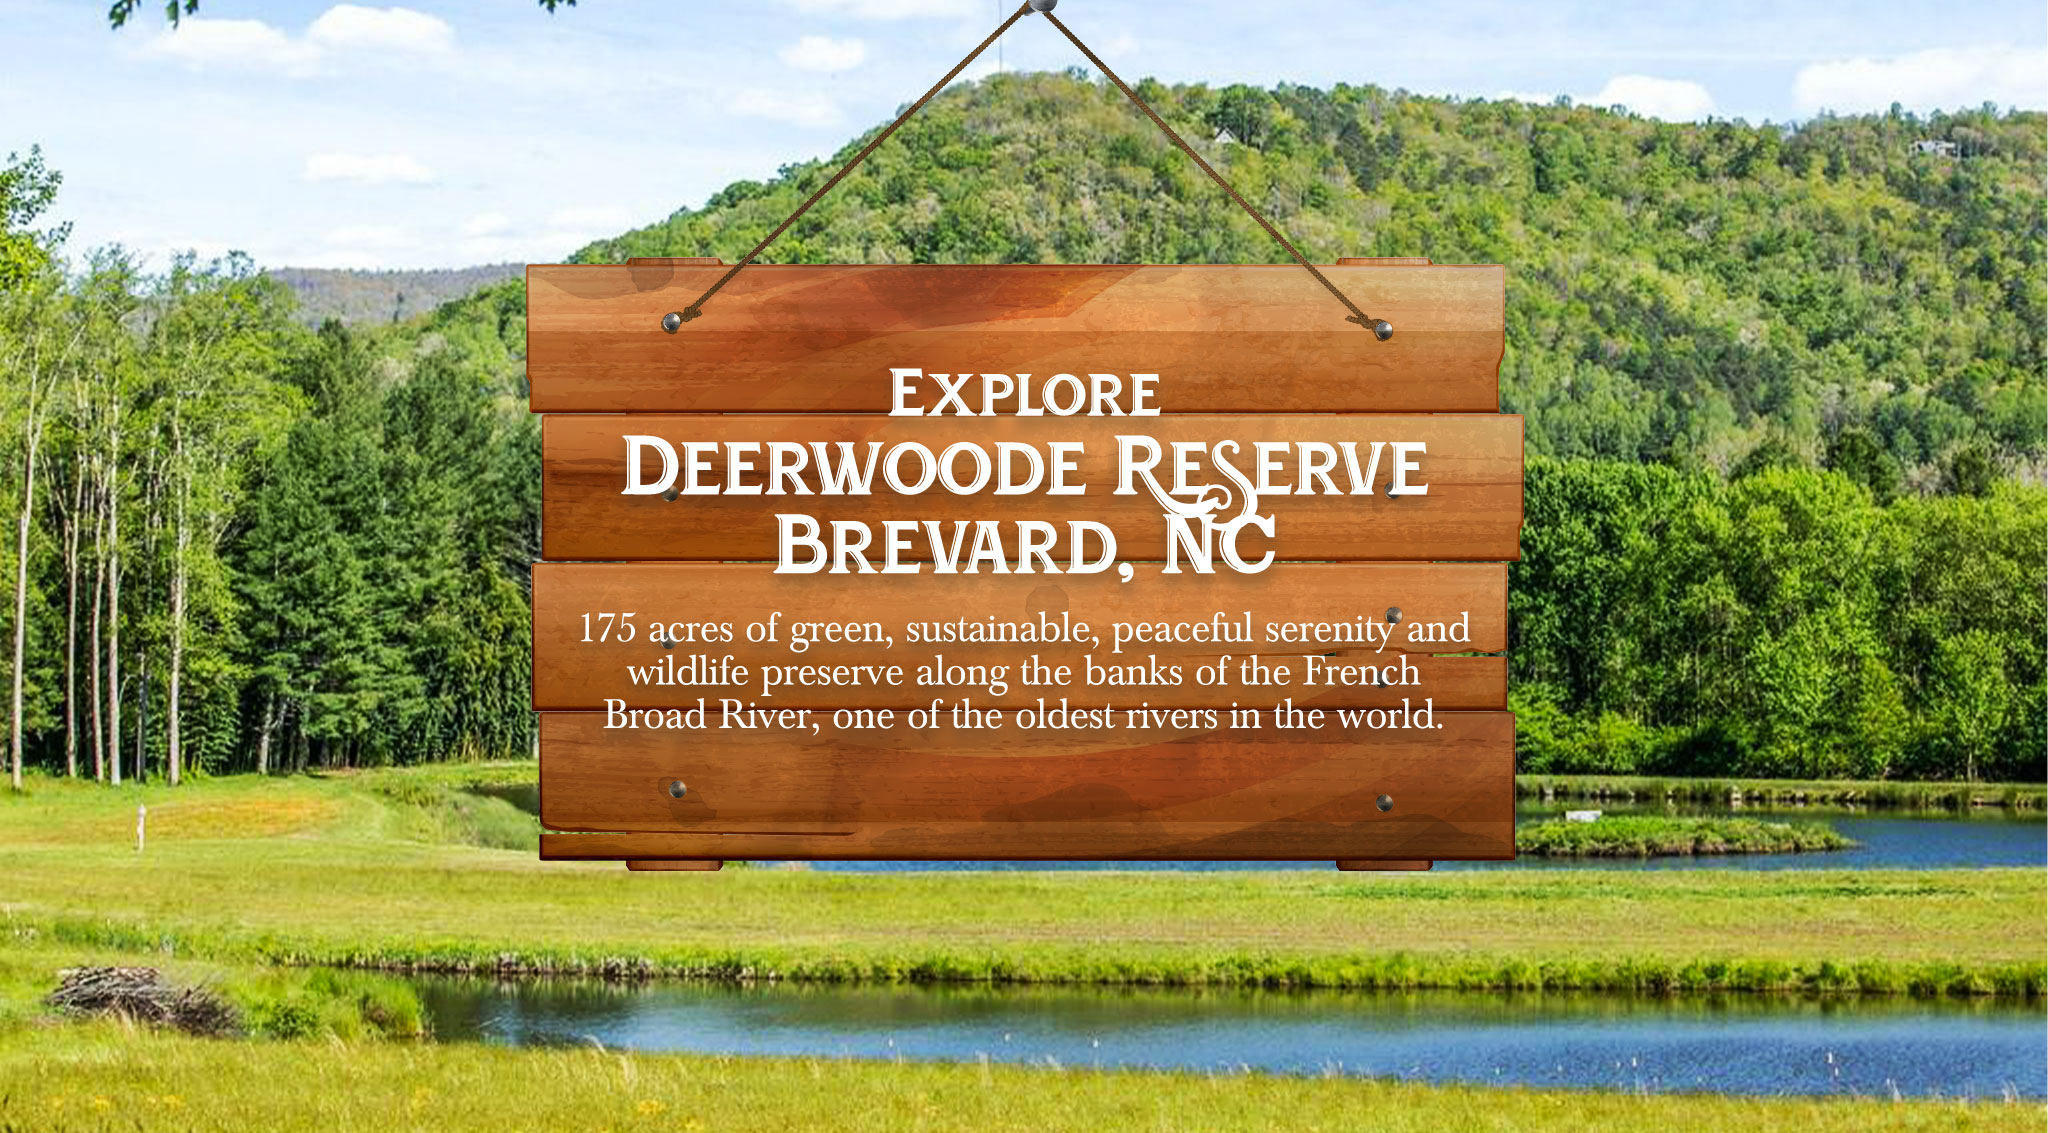 Deerwoode Reserve | A wooden sign that says explore deerwood reserve brenda, nc.